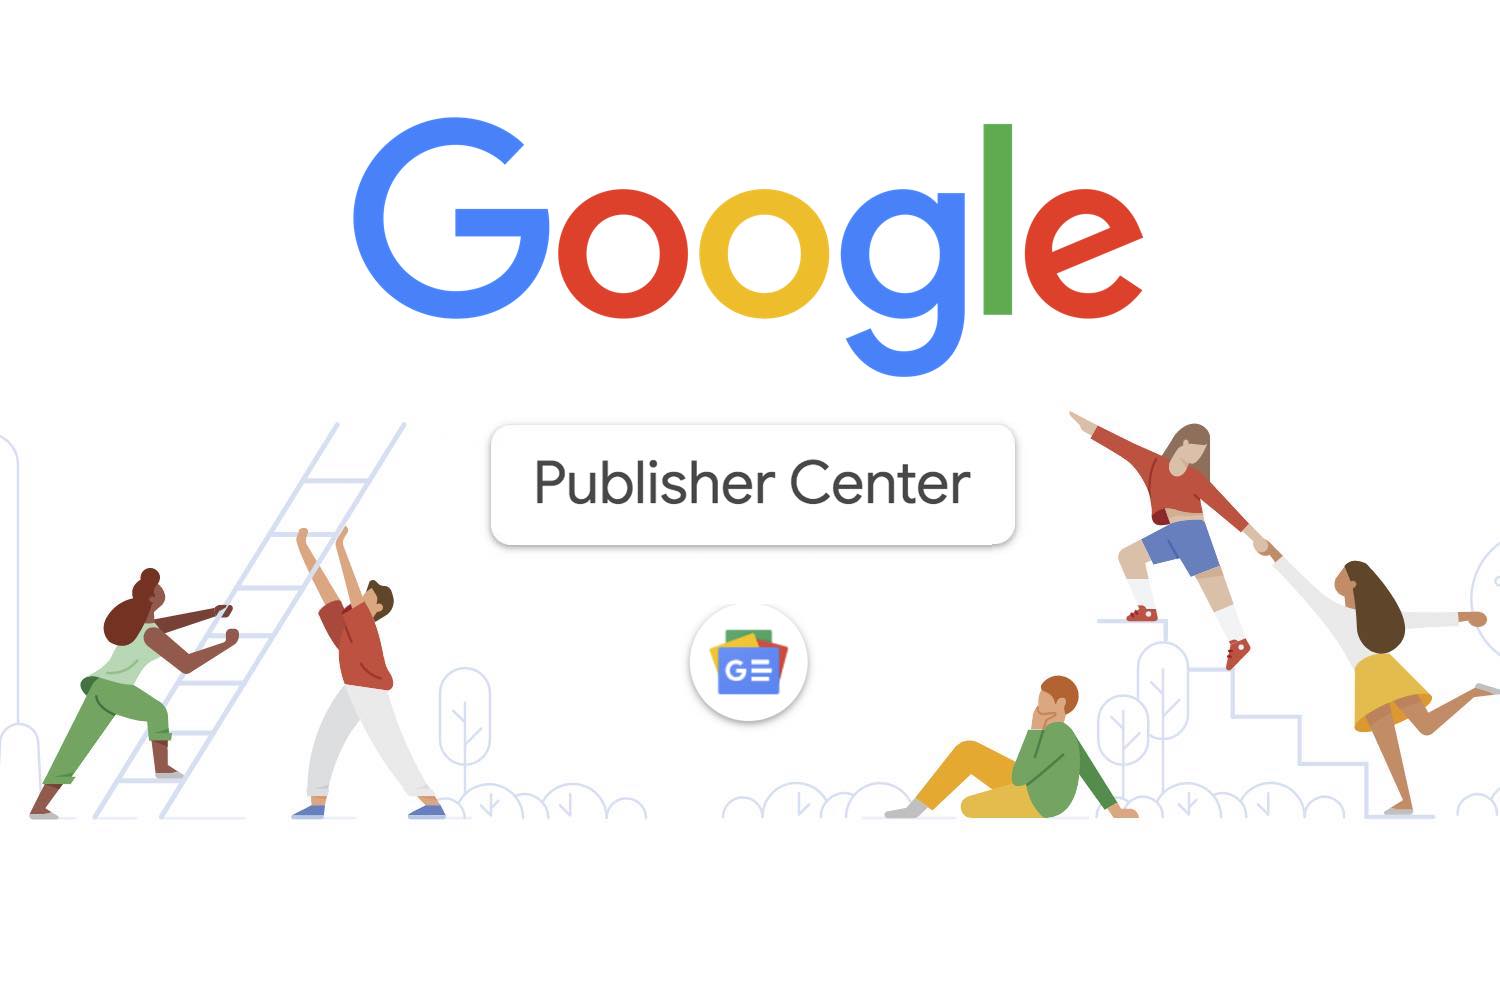 Google Publisher Center